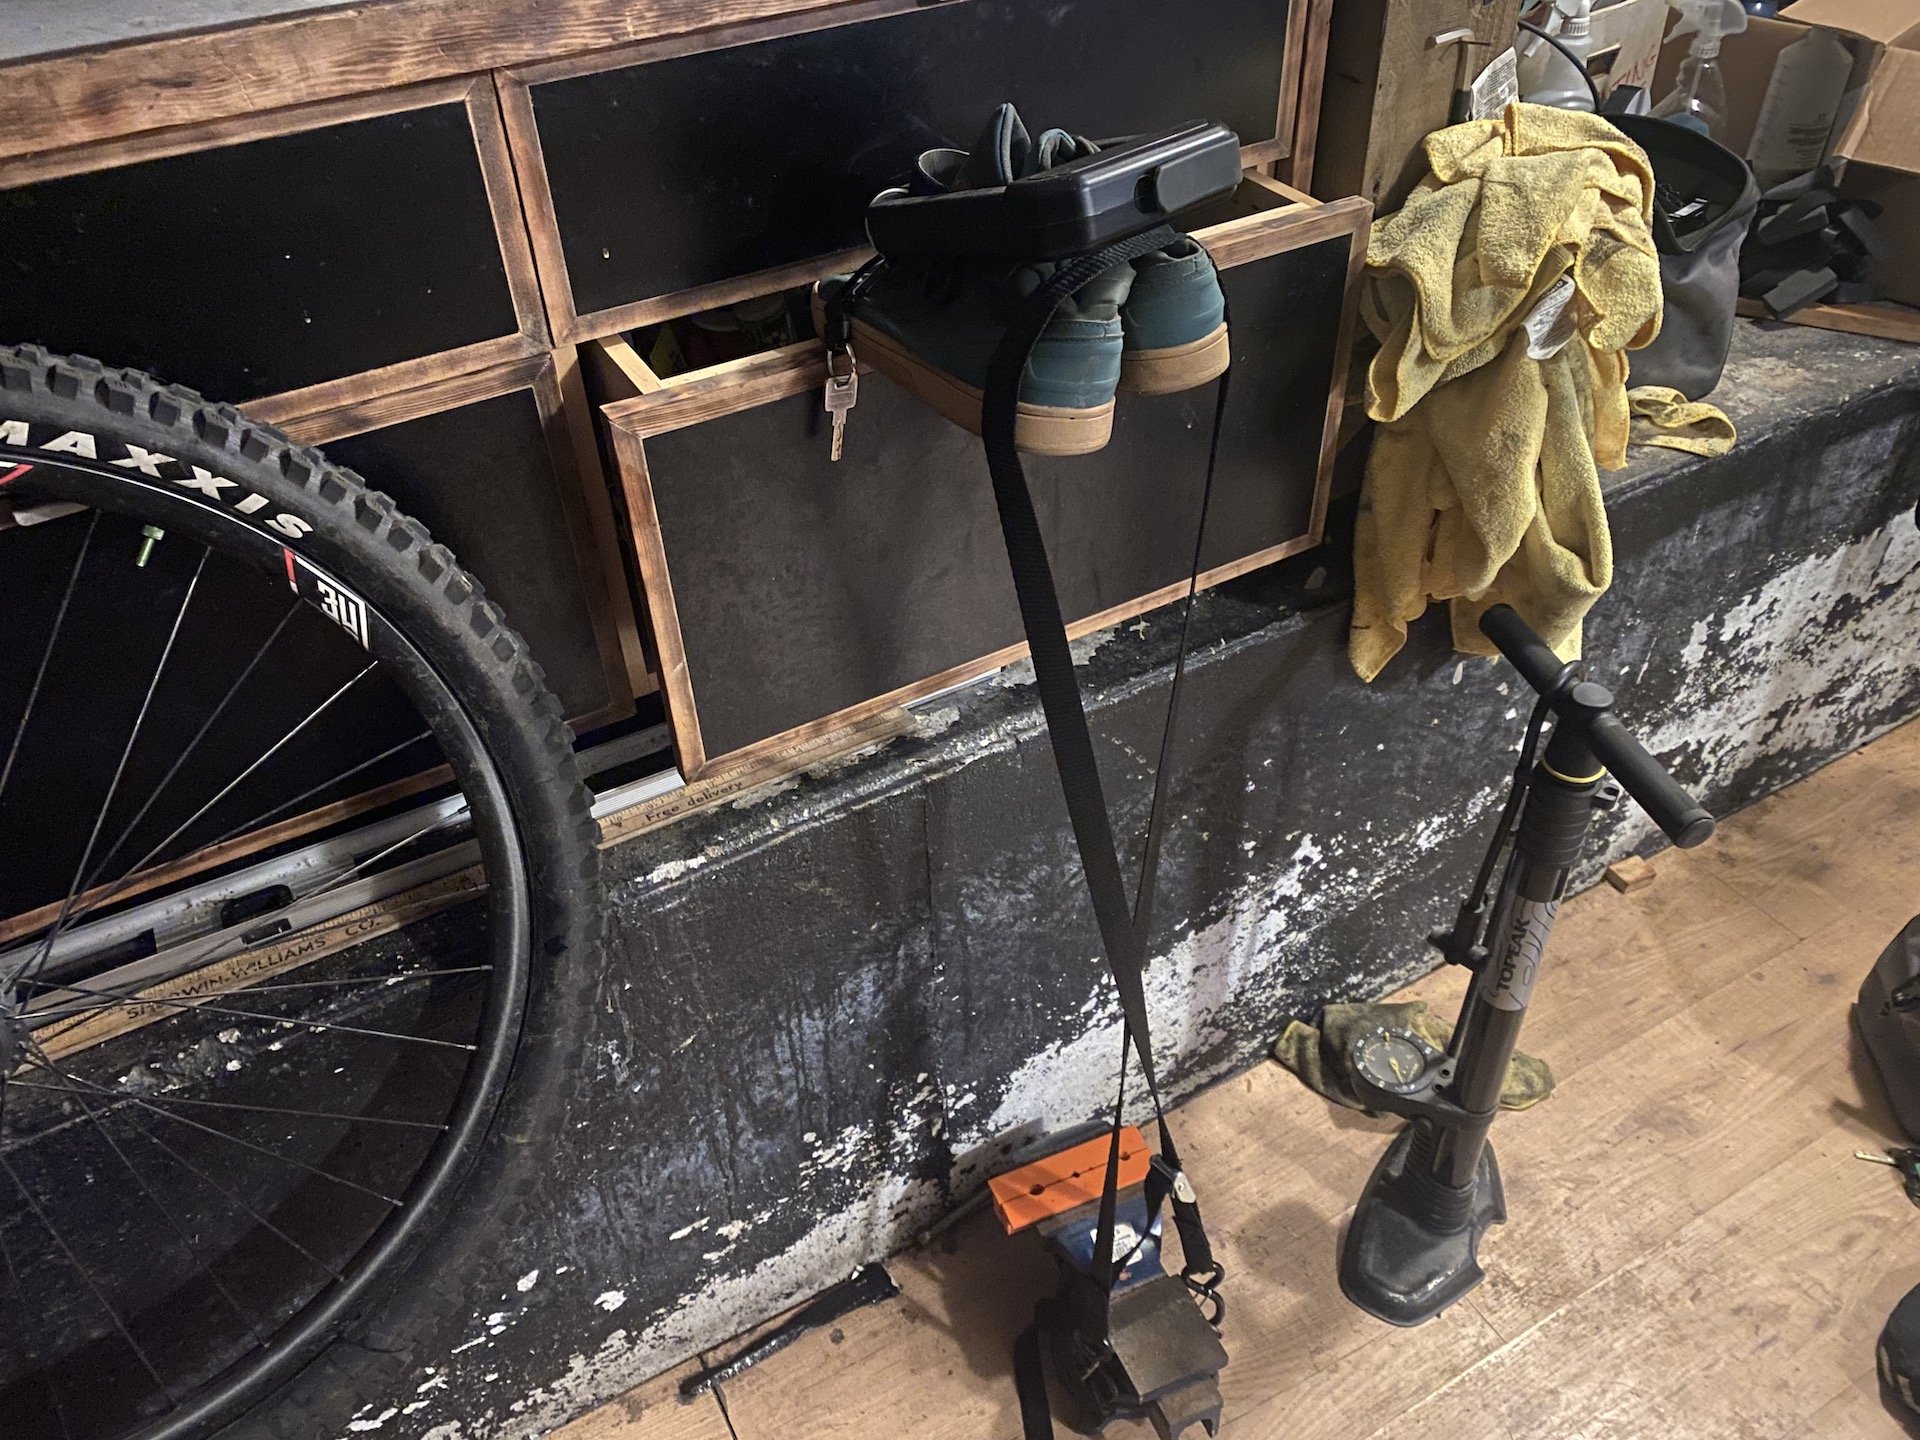 Pearl Izumi Cycling Apparel – Mike's Bikes